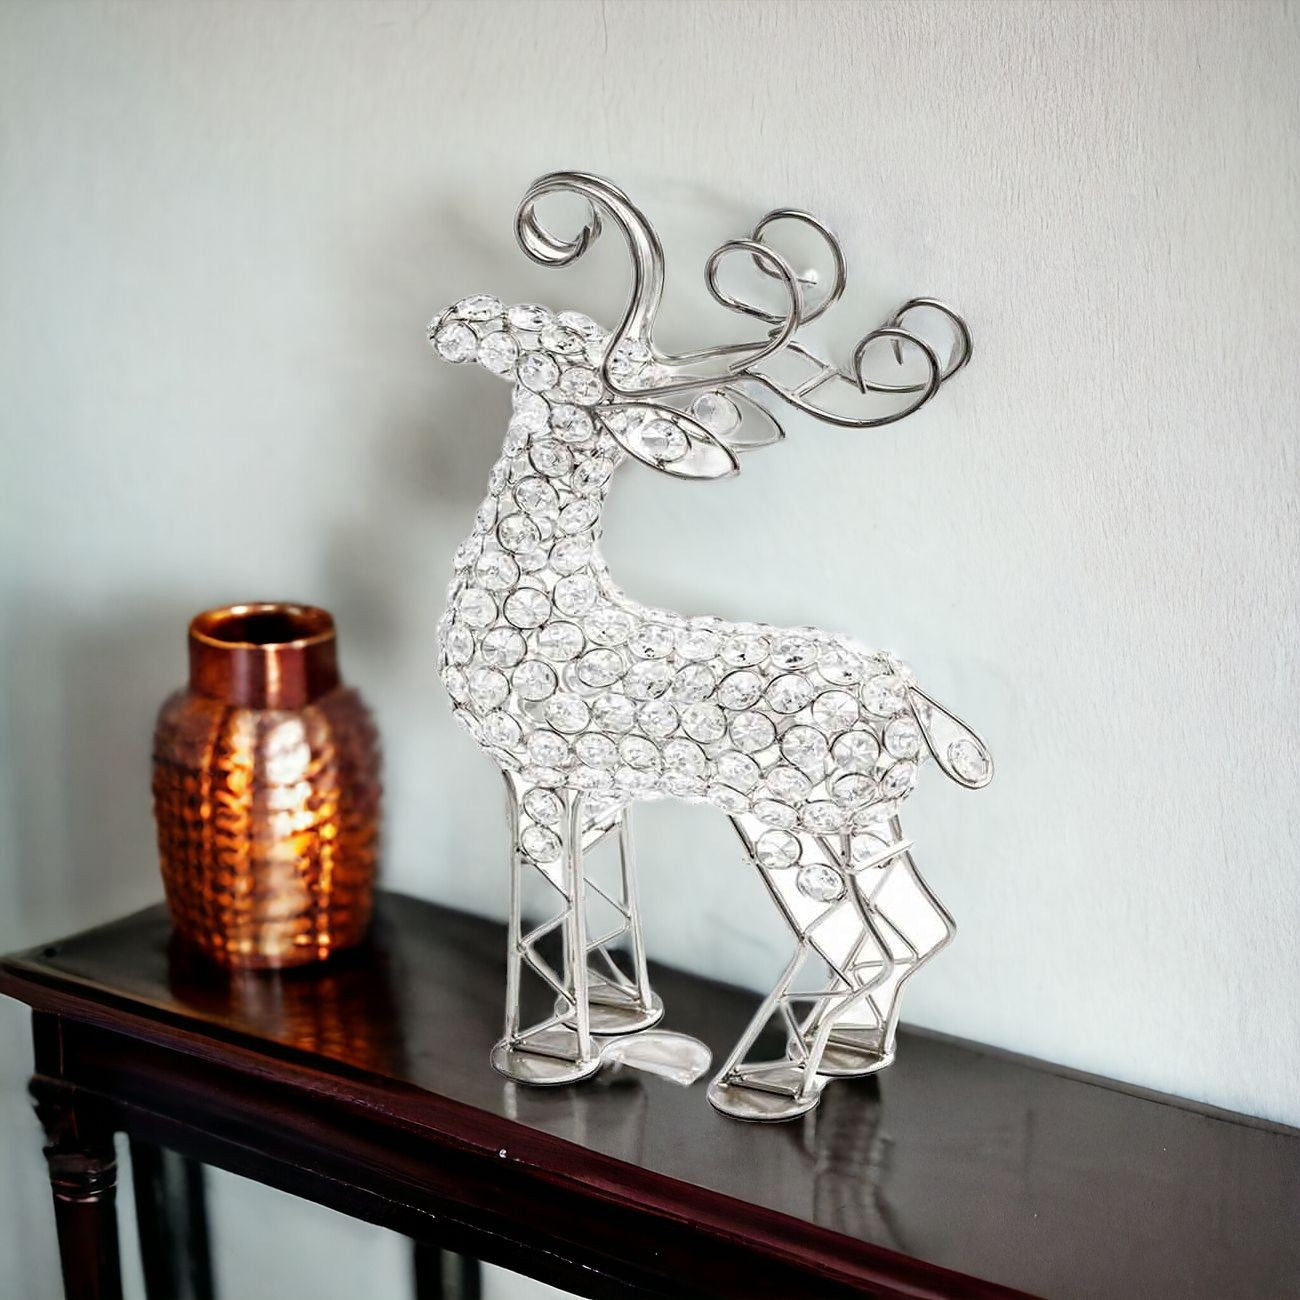 19" Gold Metal Reindeer Figurine